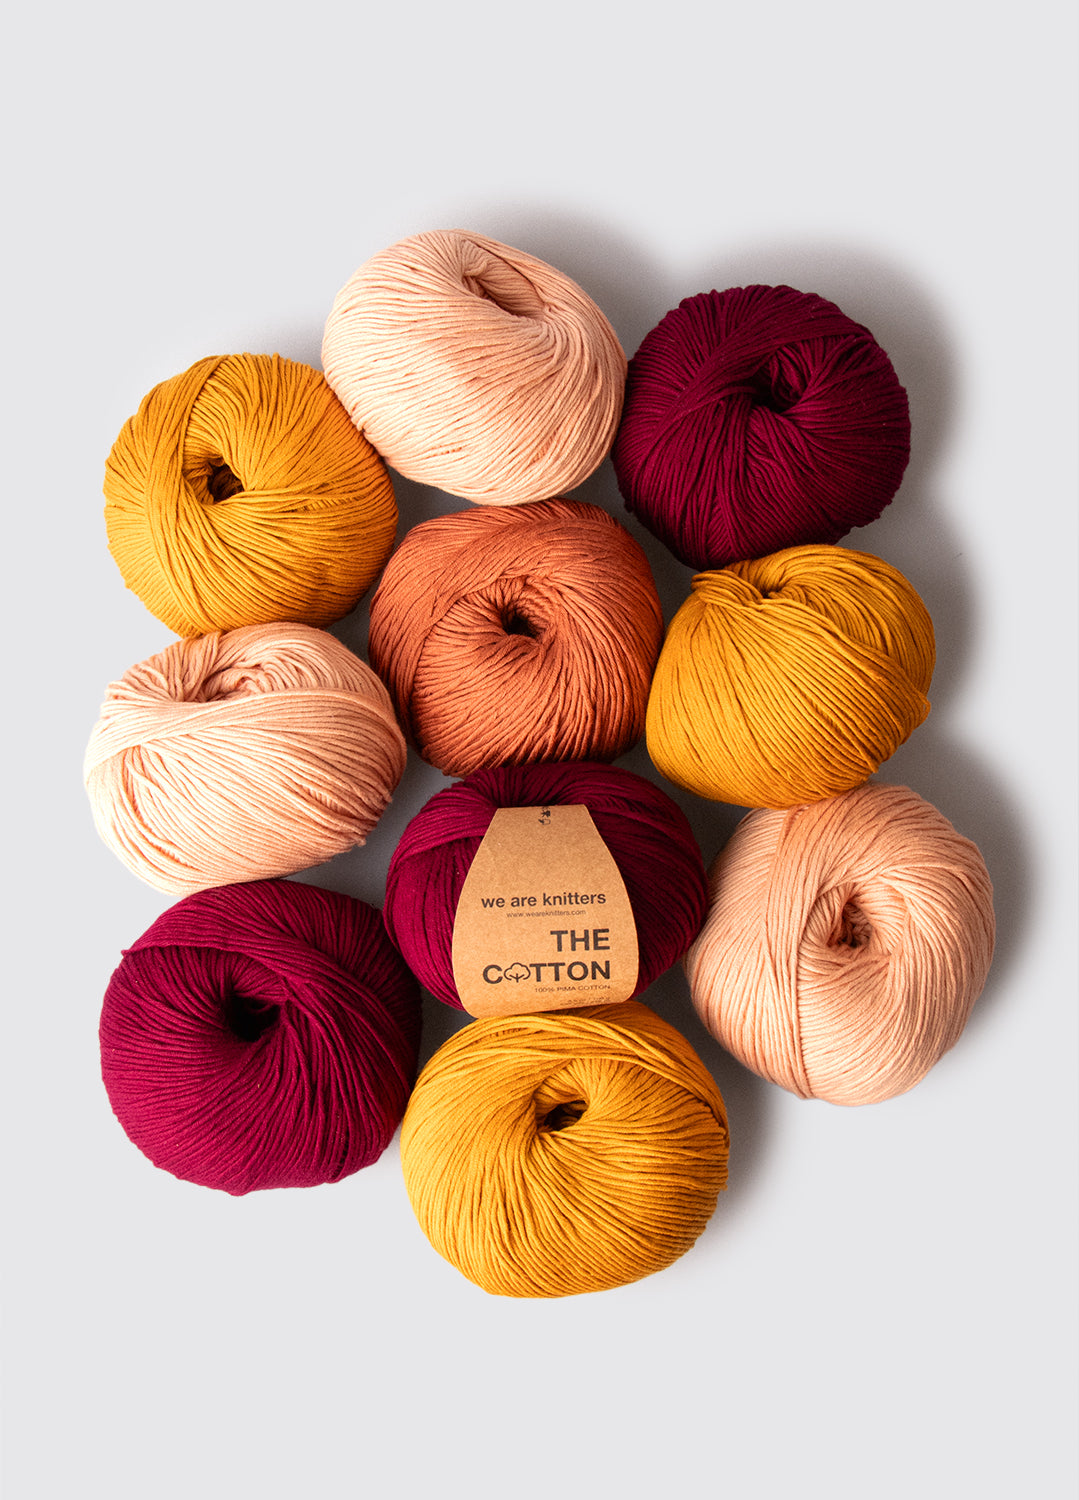 10 Pack of Pima Cotton Yarn Balls